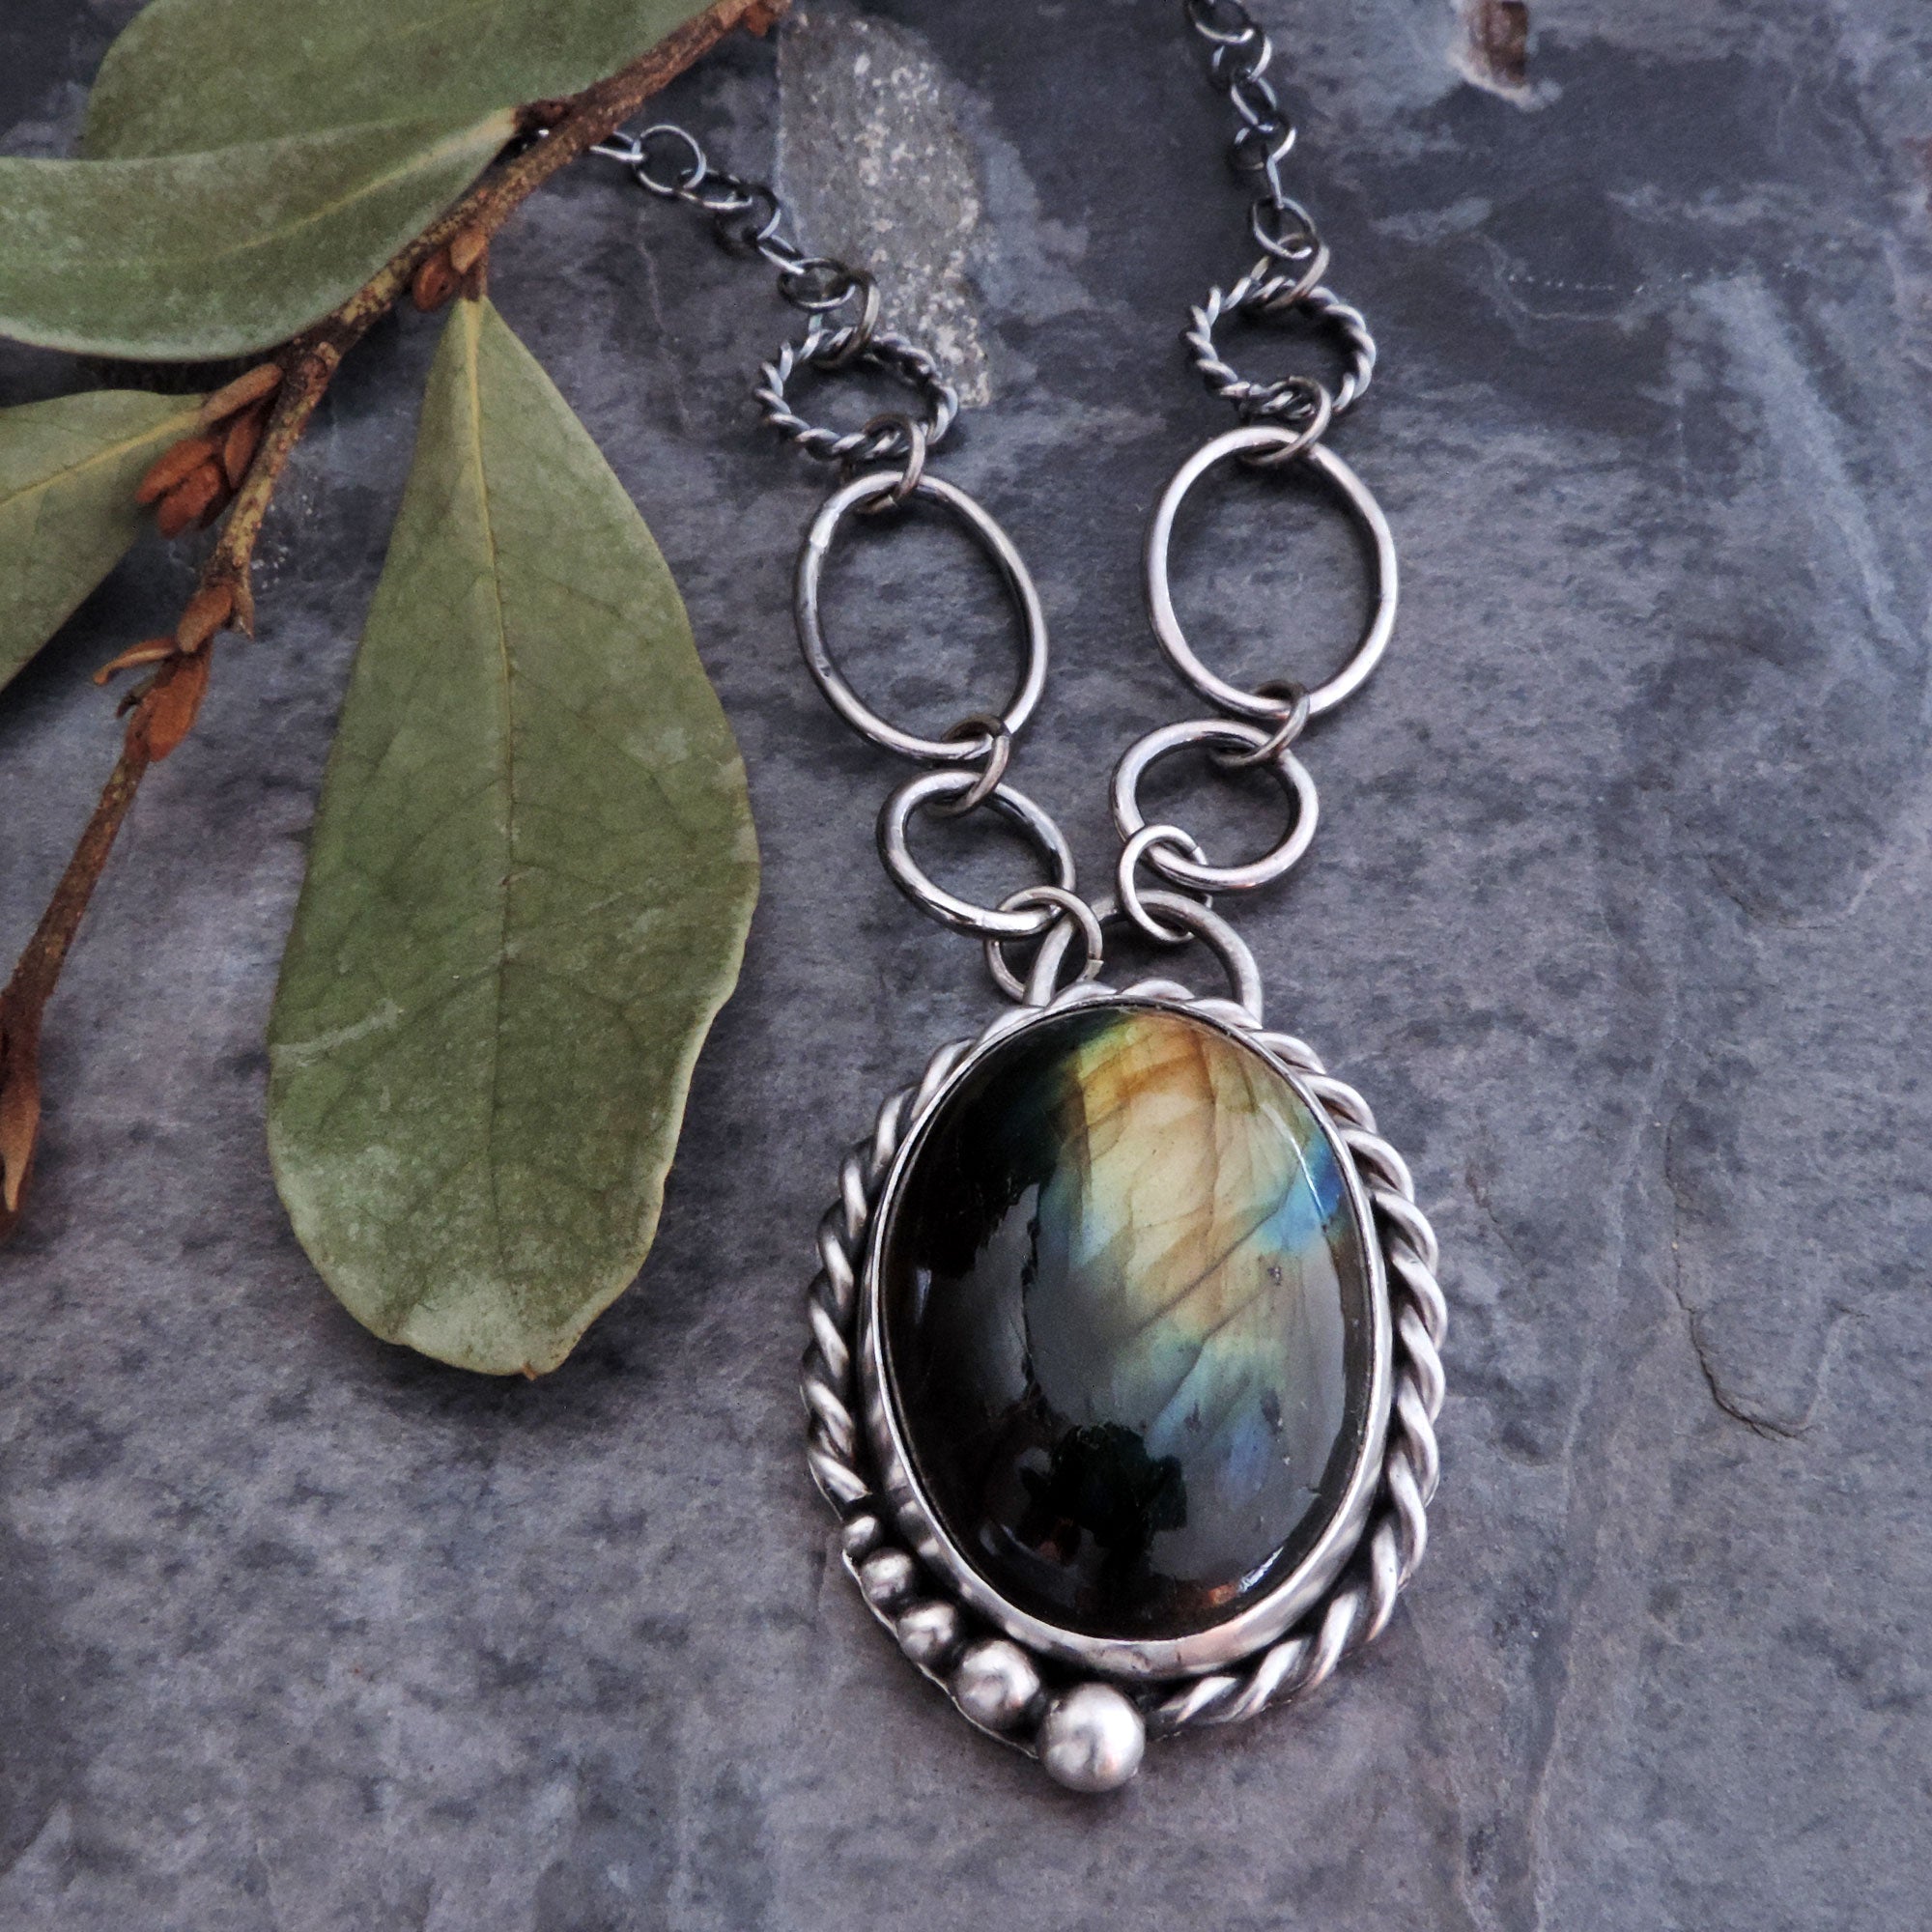 Labradorite Gemstone Necklace with Twist Bezel Design - A Twist of Whimsy